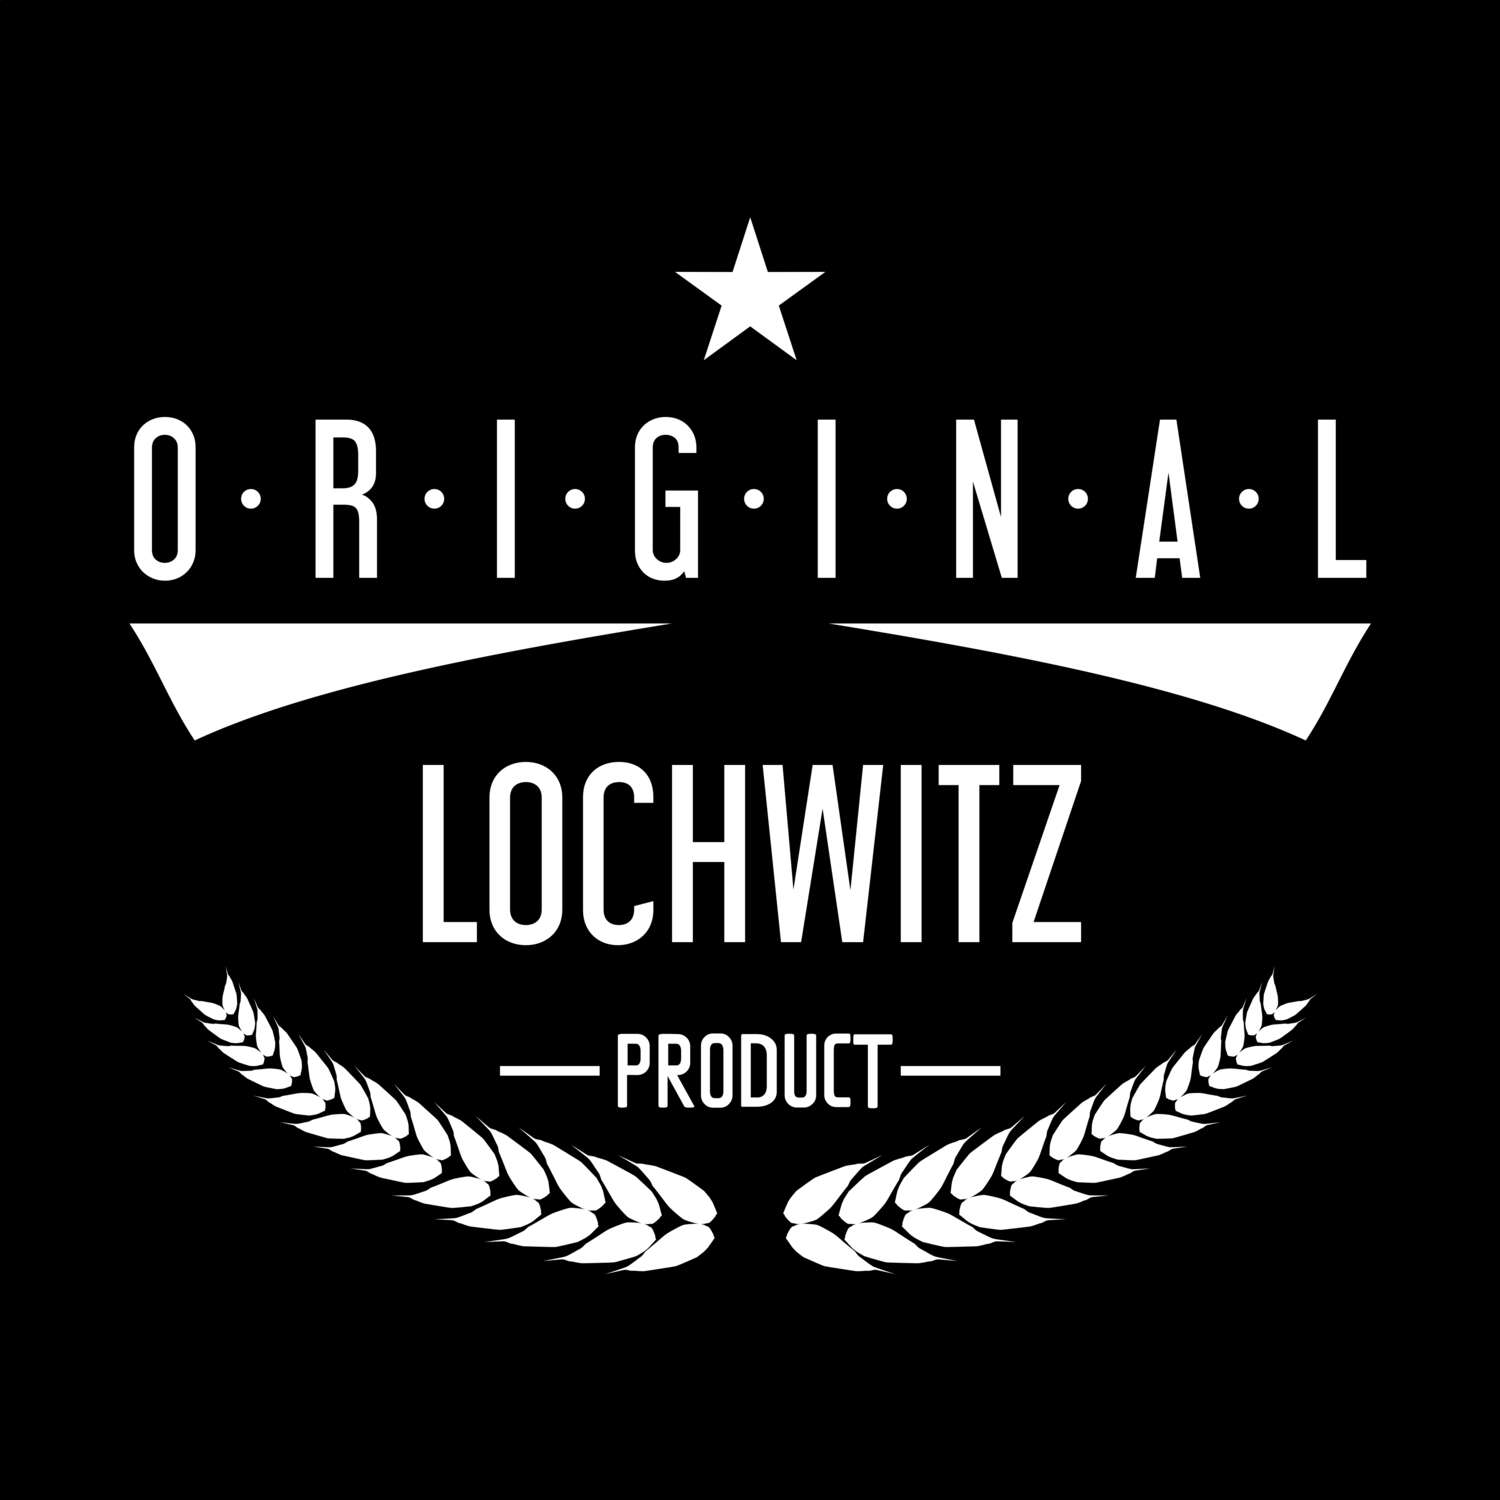 Lochwitz T-Shirt »Original Product«